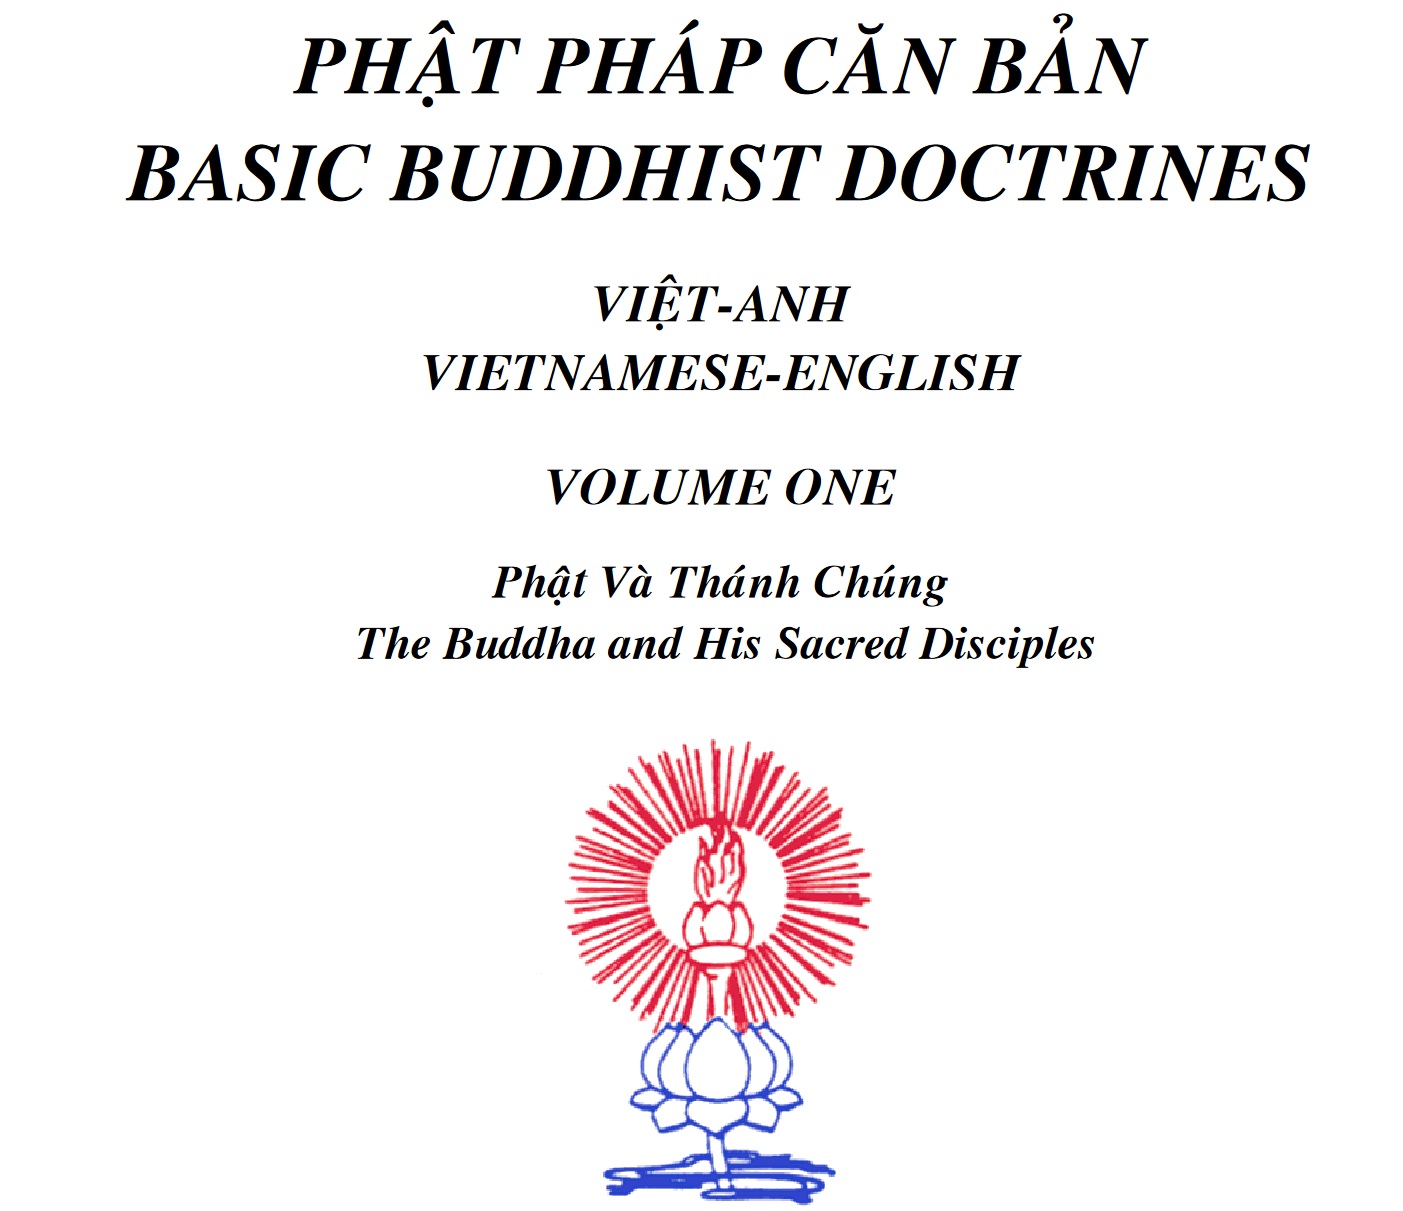 [PDF] Basic Buddhist Doctrines by Thien Phuc – The full 8 volumes